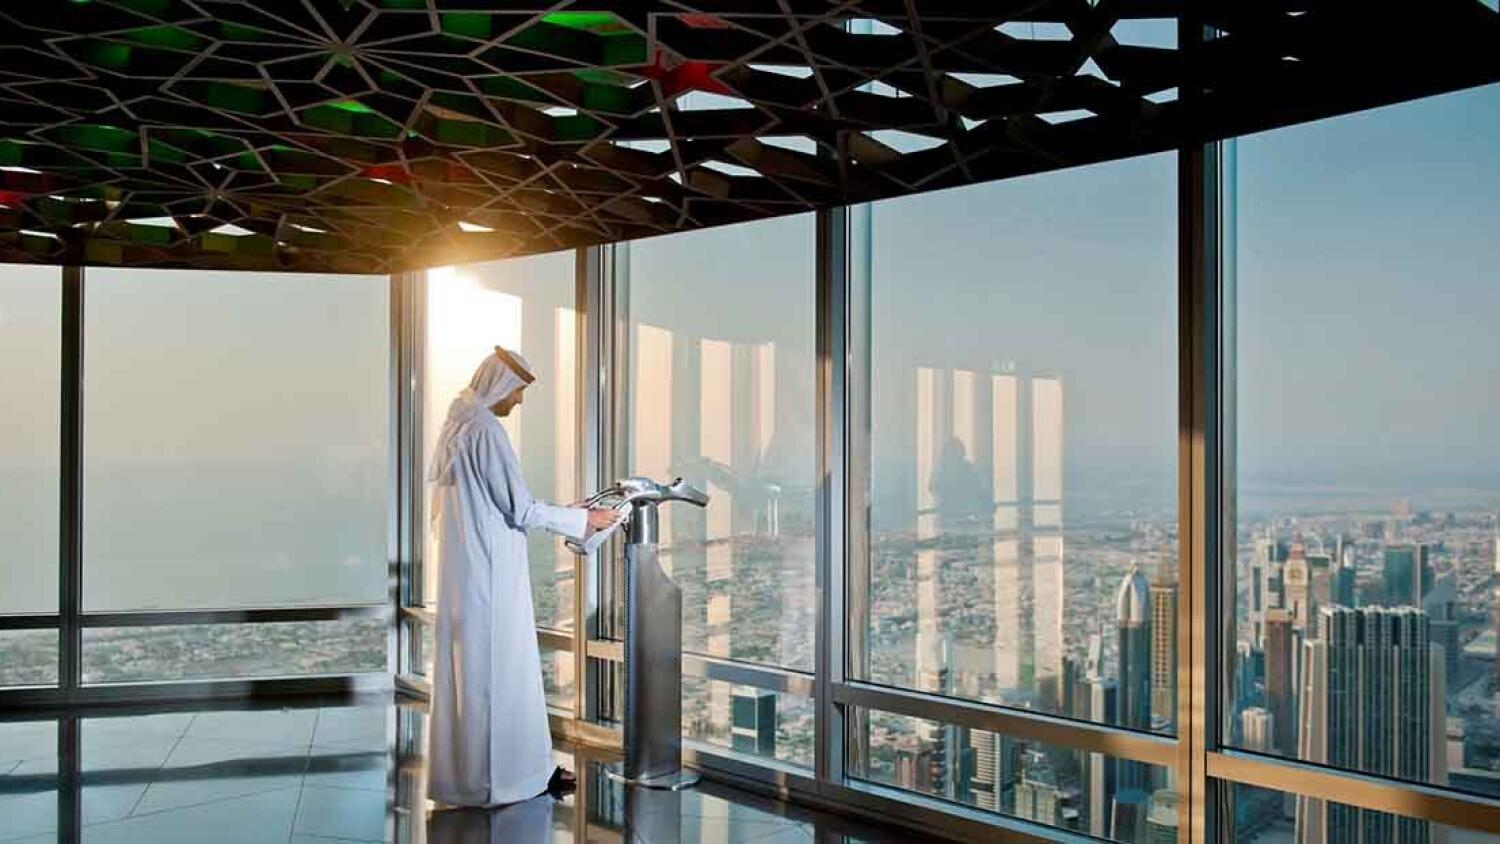 Бурдж халифа какие этажи. Дубай Бурдж Халифа смотровая. Дубай Бурдж Халифа внутри. Смотровая площадка Бурдж Халифа. Дубай Бурдж Халифа смотровая площадка.